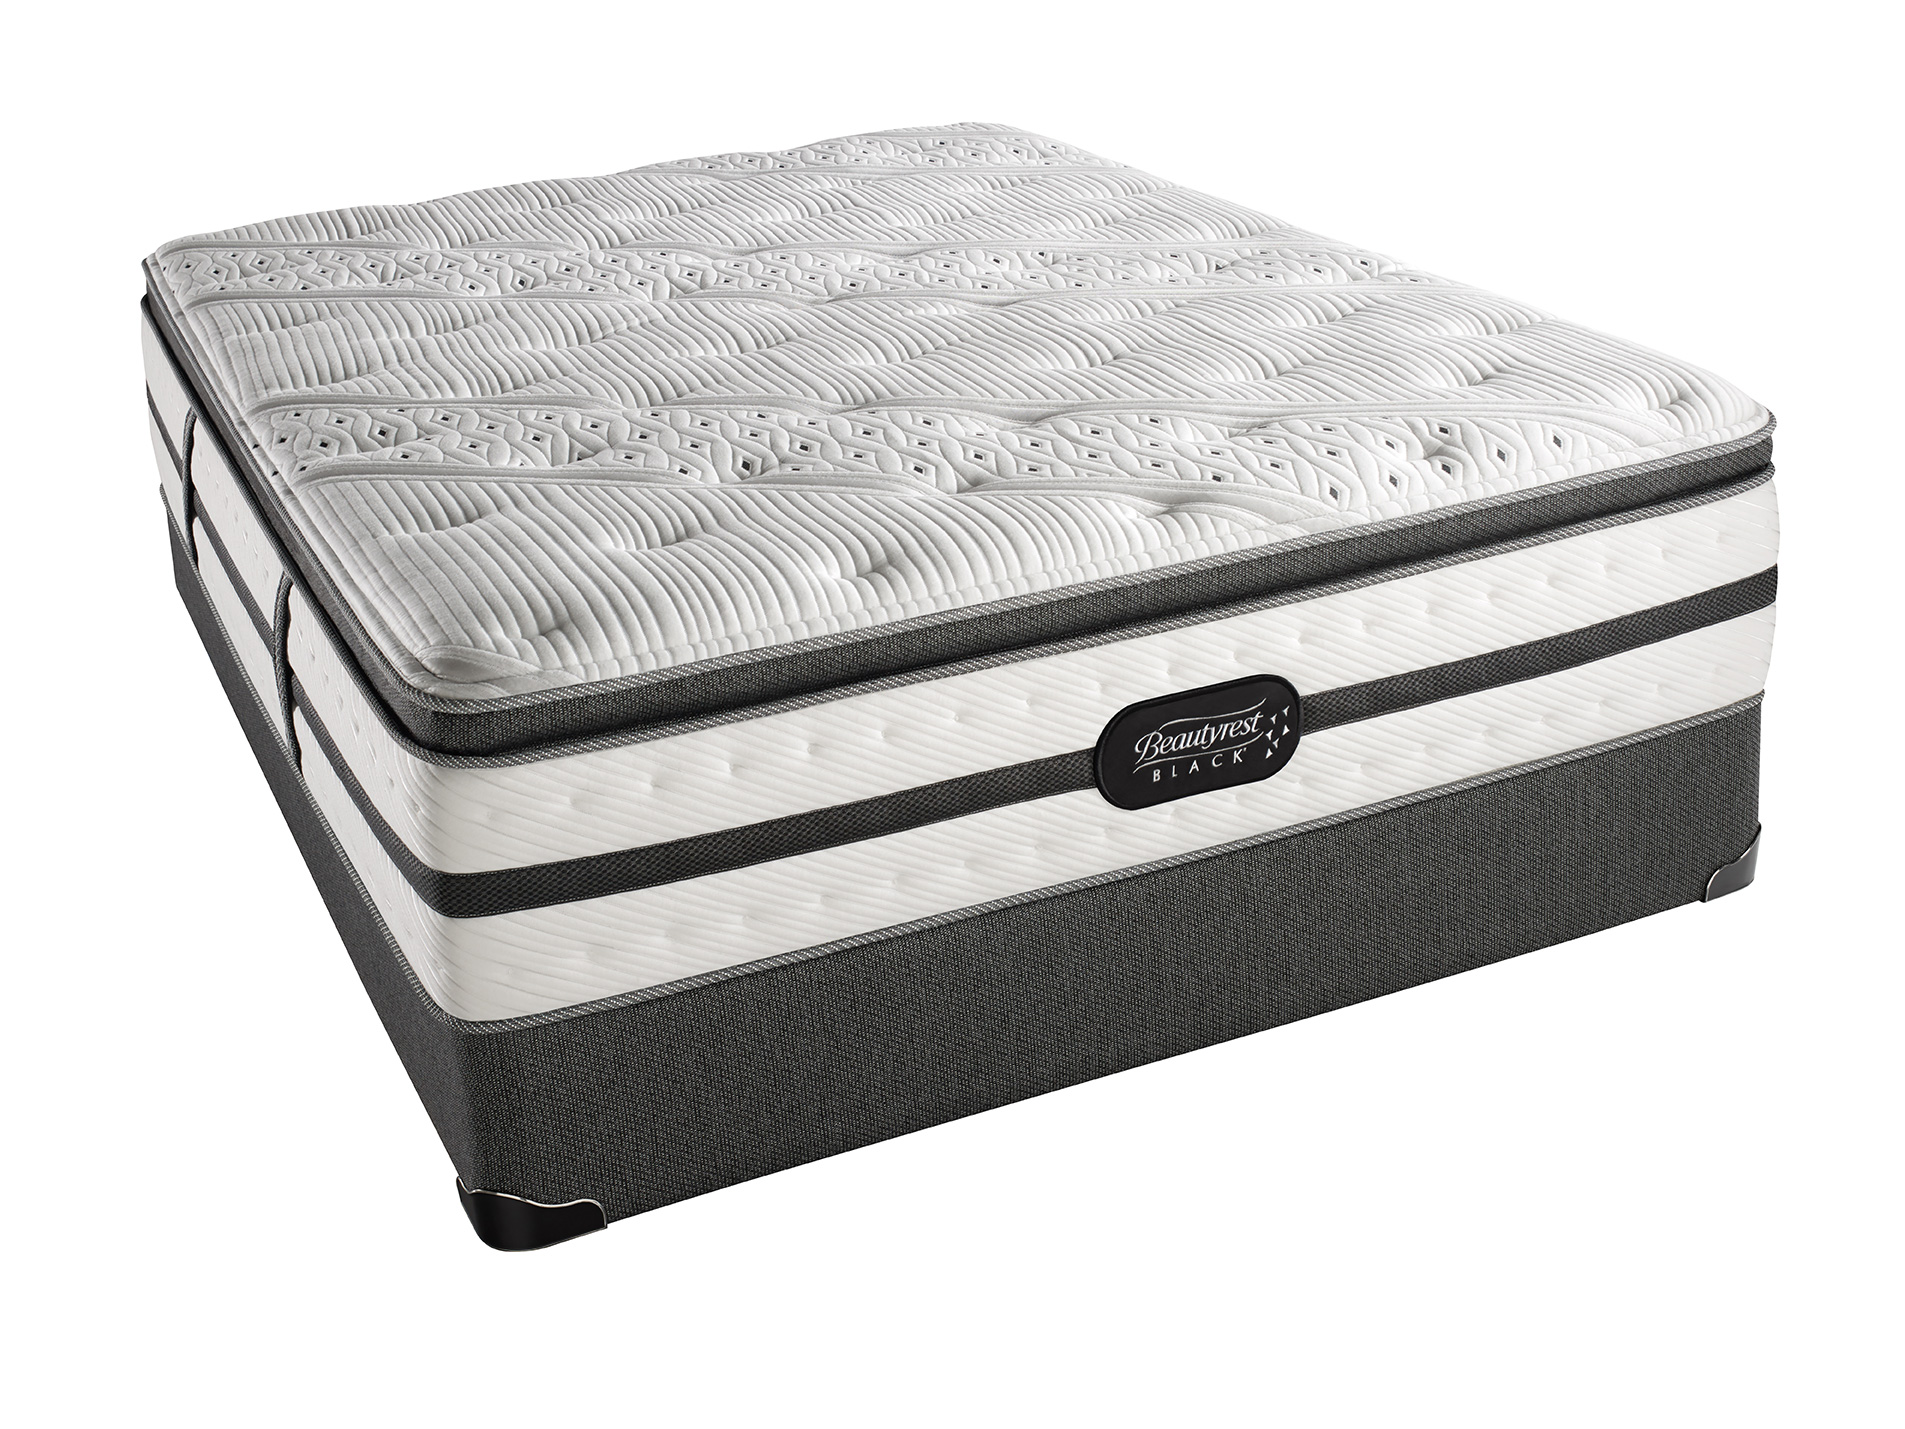 intermission plush pillow top hotel mattress specafacation